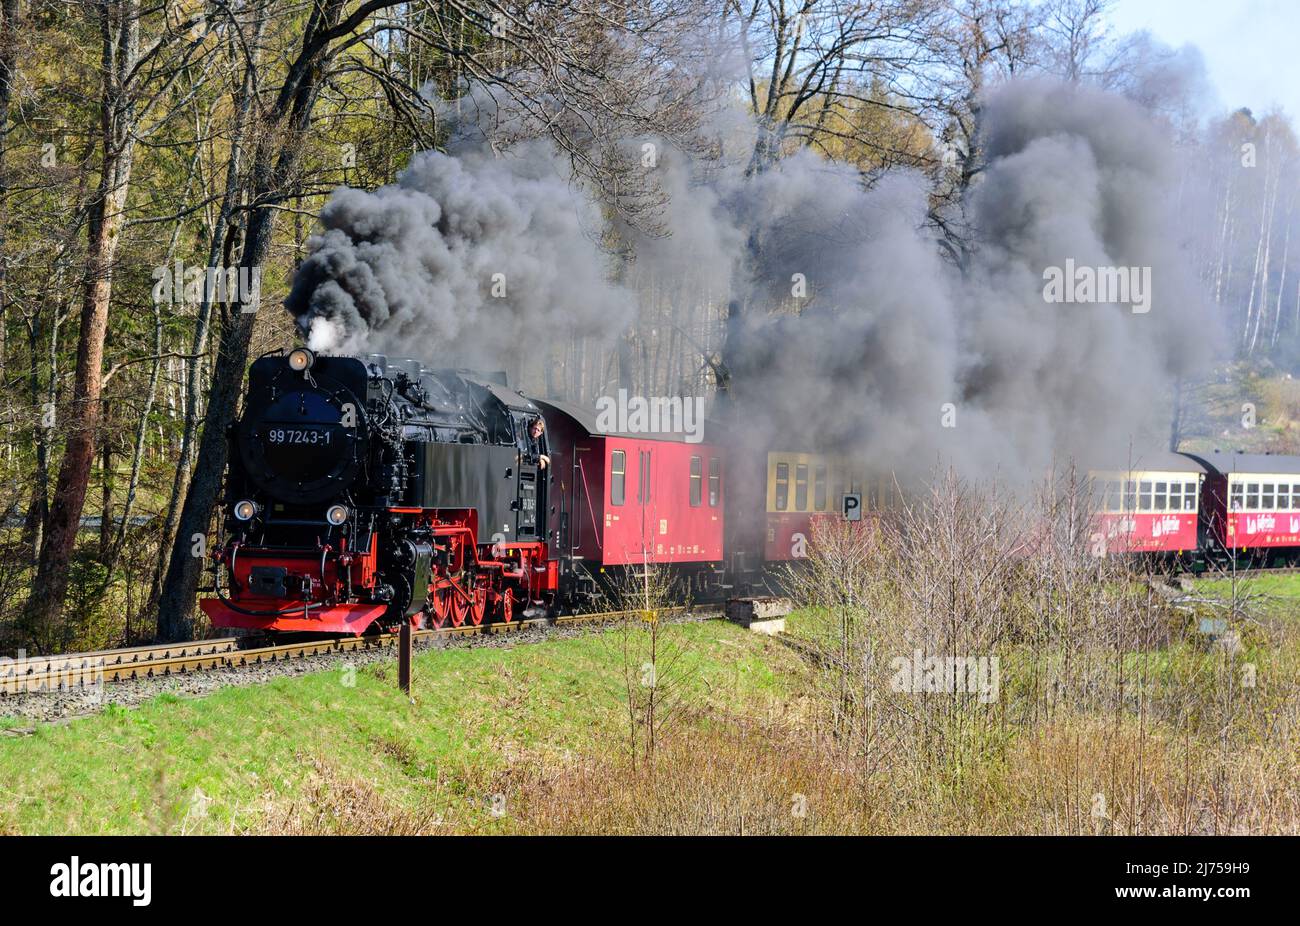 Brockenbahn steam train in the Harz Mountains, Germany Stock Photo